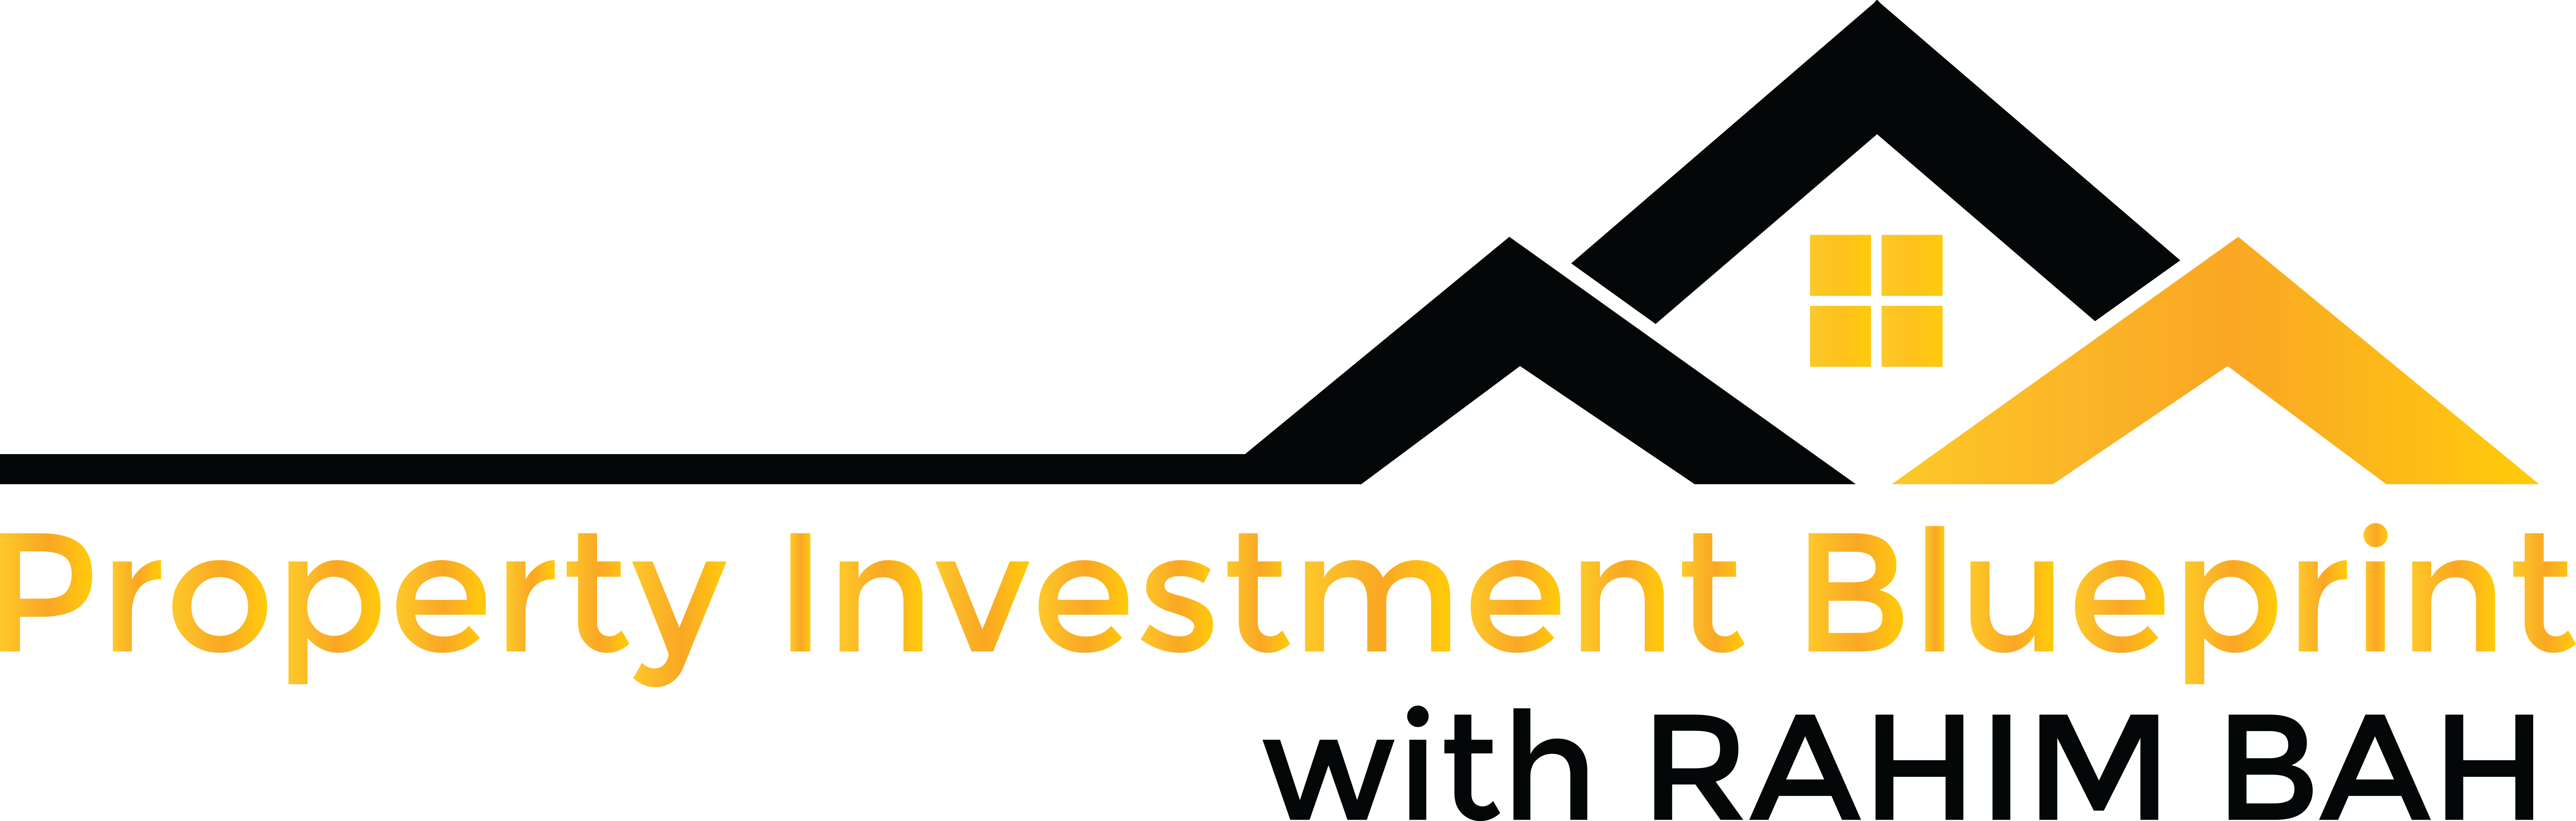 BRRR Training Virtual Event Property Investment Blueprint